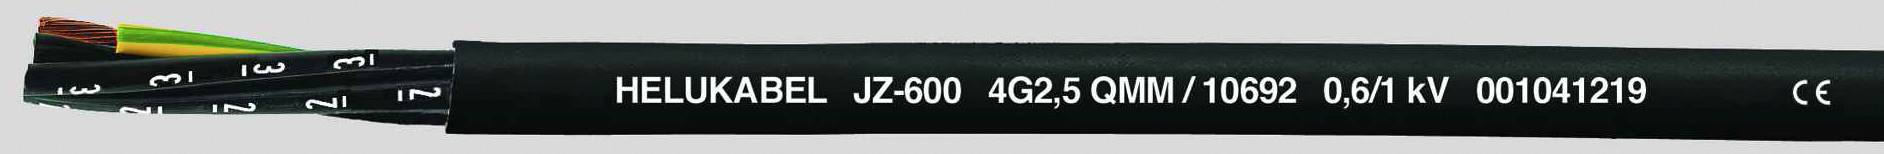 HELUKABEL JZ-600 Steuerleitung 18 G 1 mm² Schwarz 10634-1000 1000 m